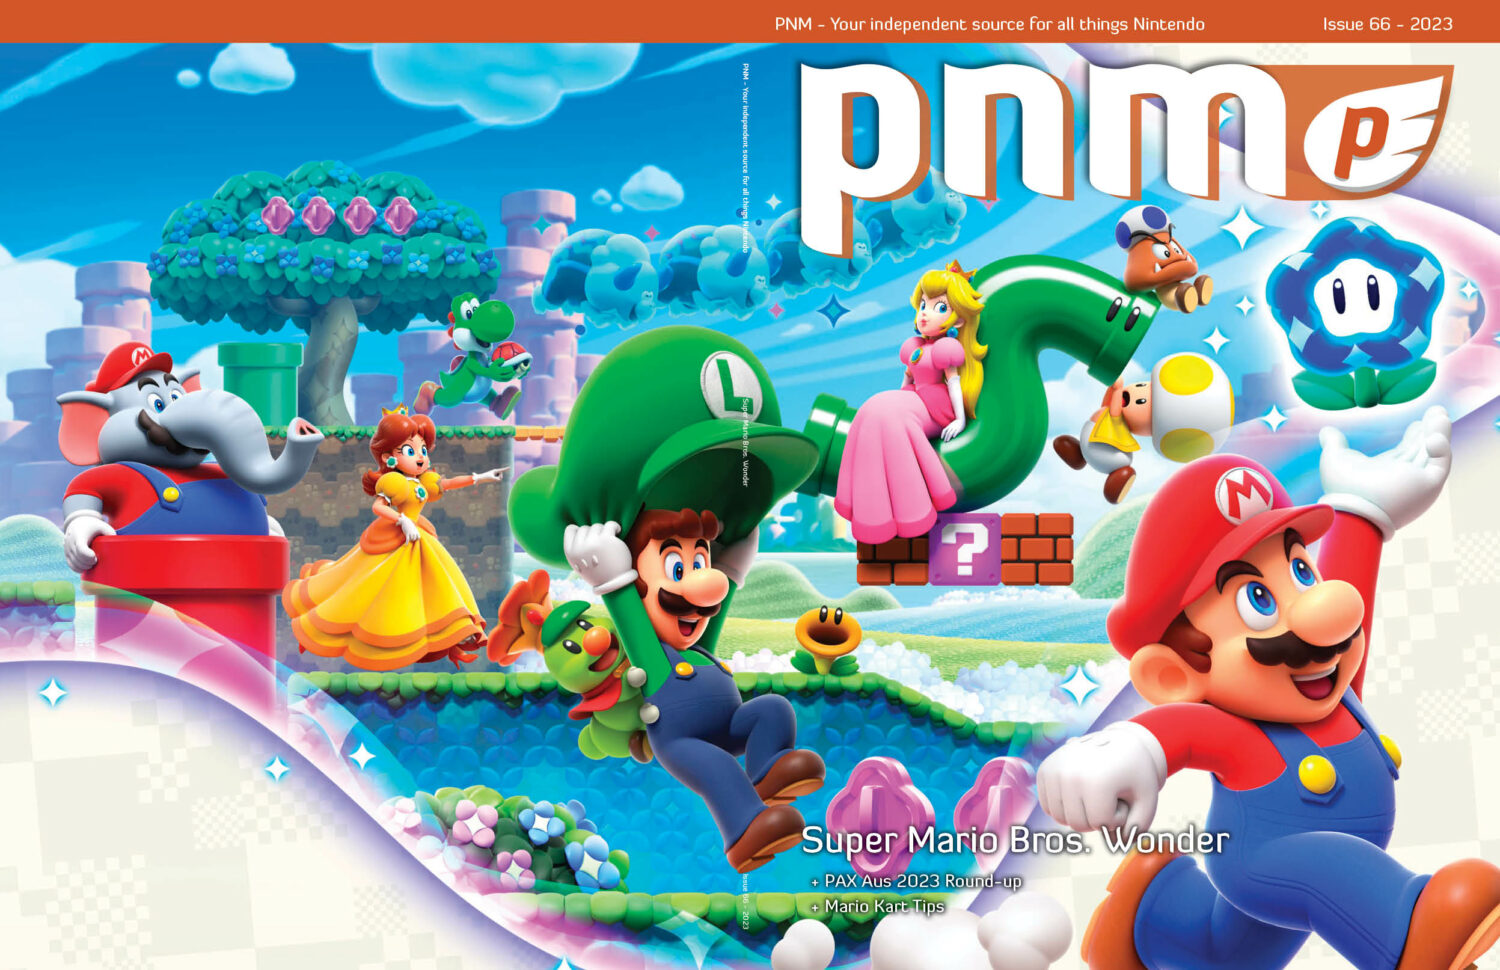 Pure Nintendo Magazine Issue 66 Cover